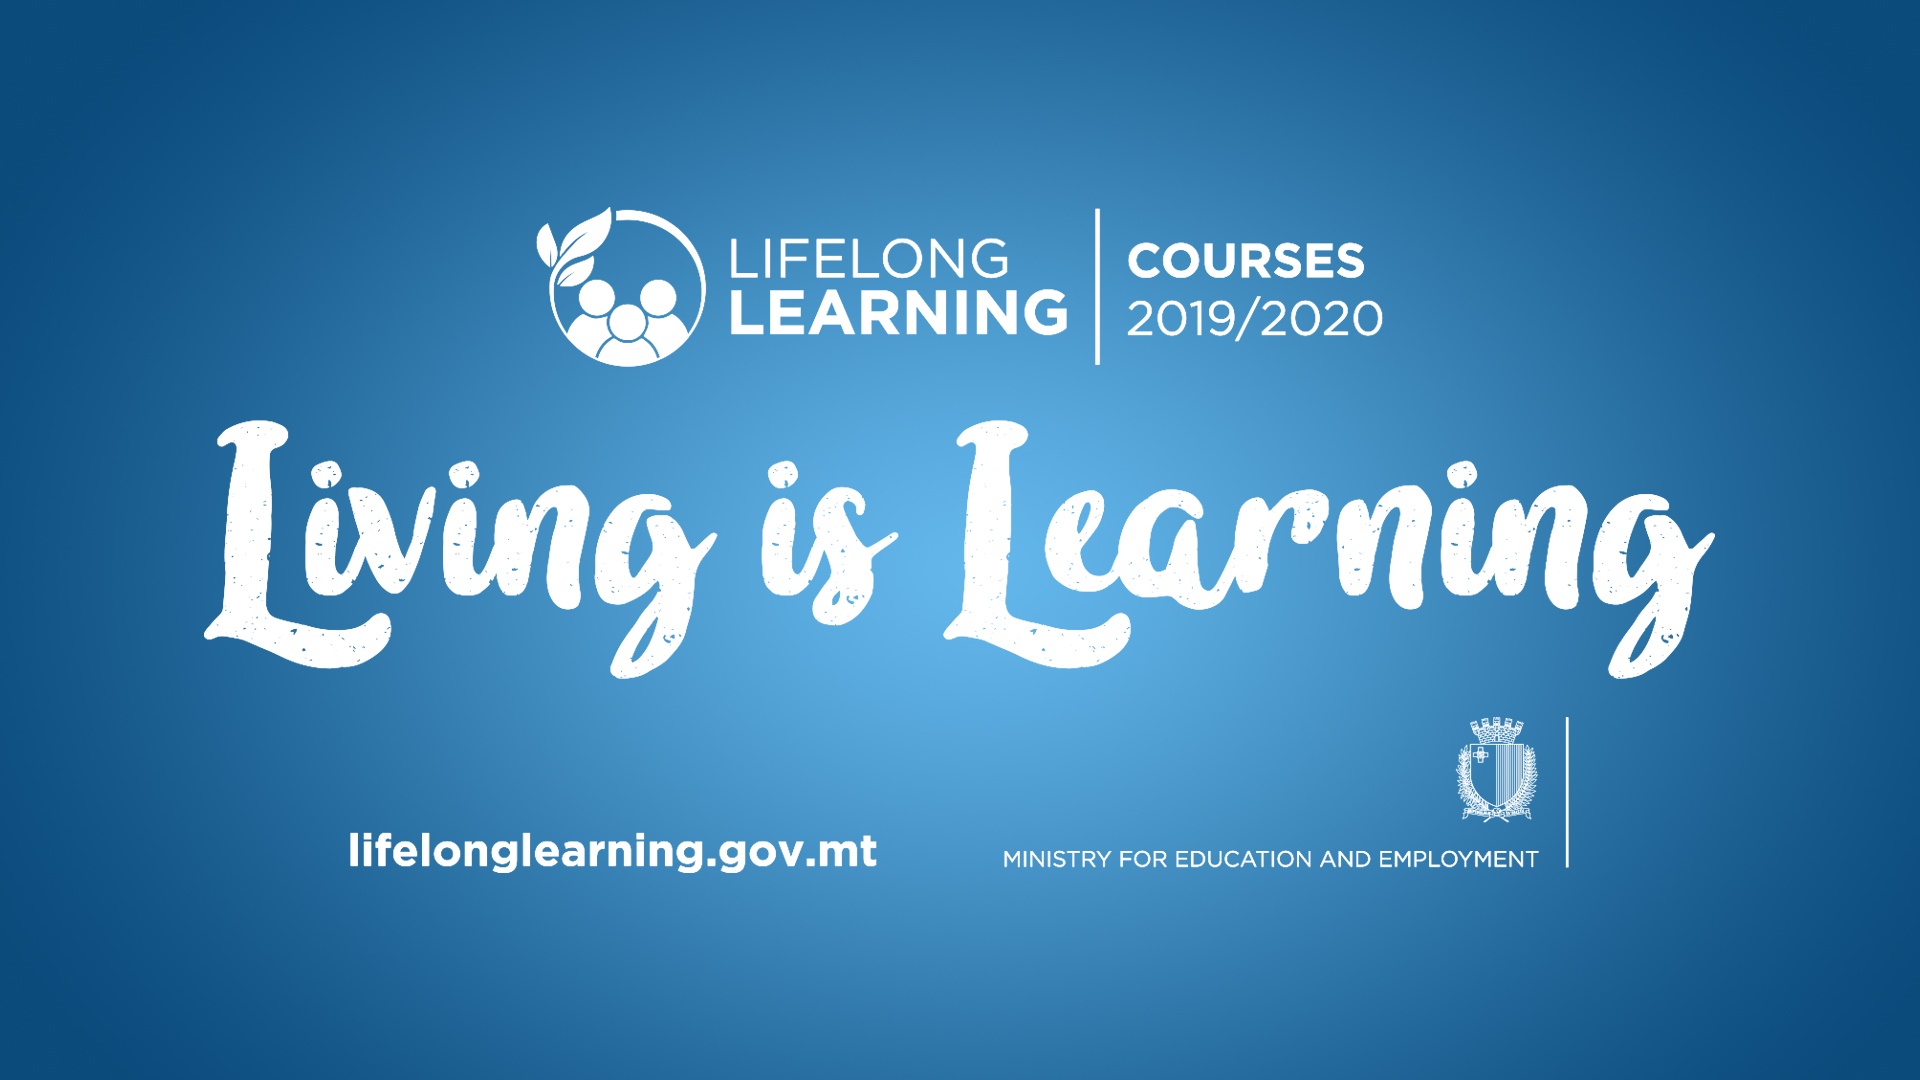 I learnt перевод. Lifelong Learning. Life Live Learning.